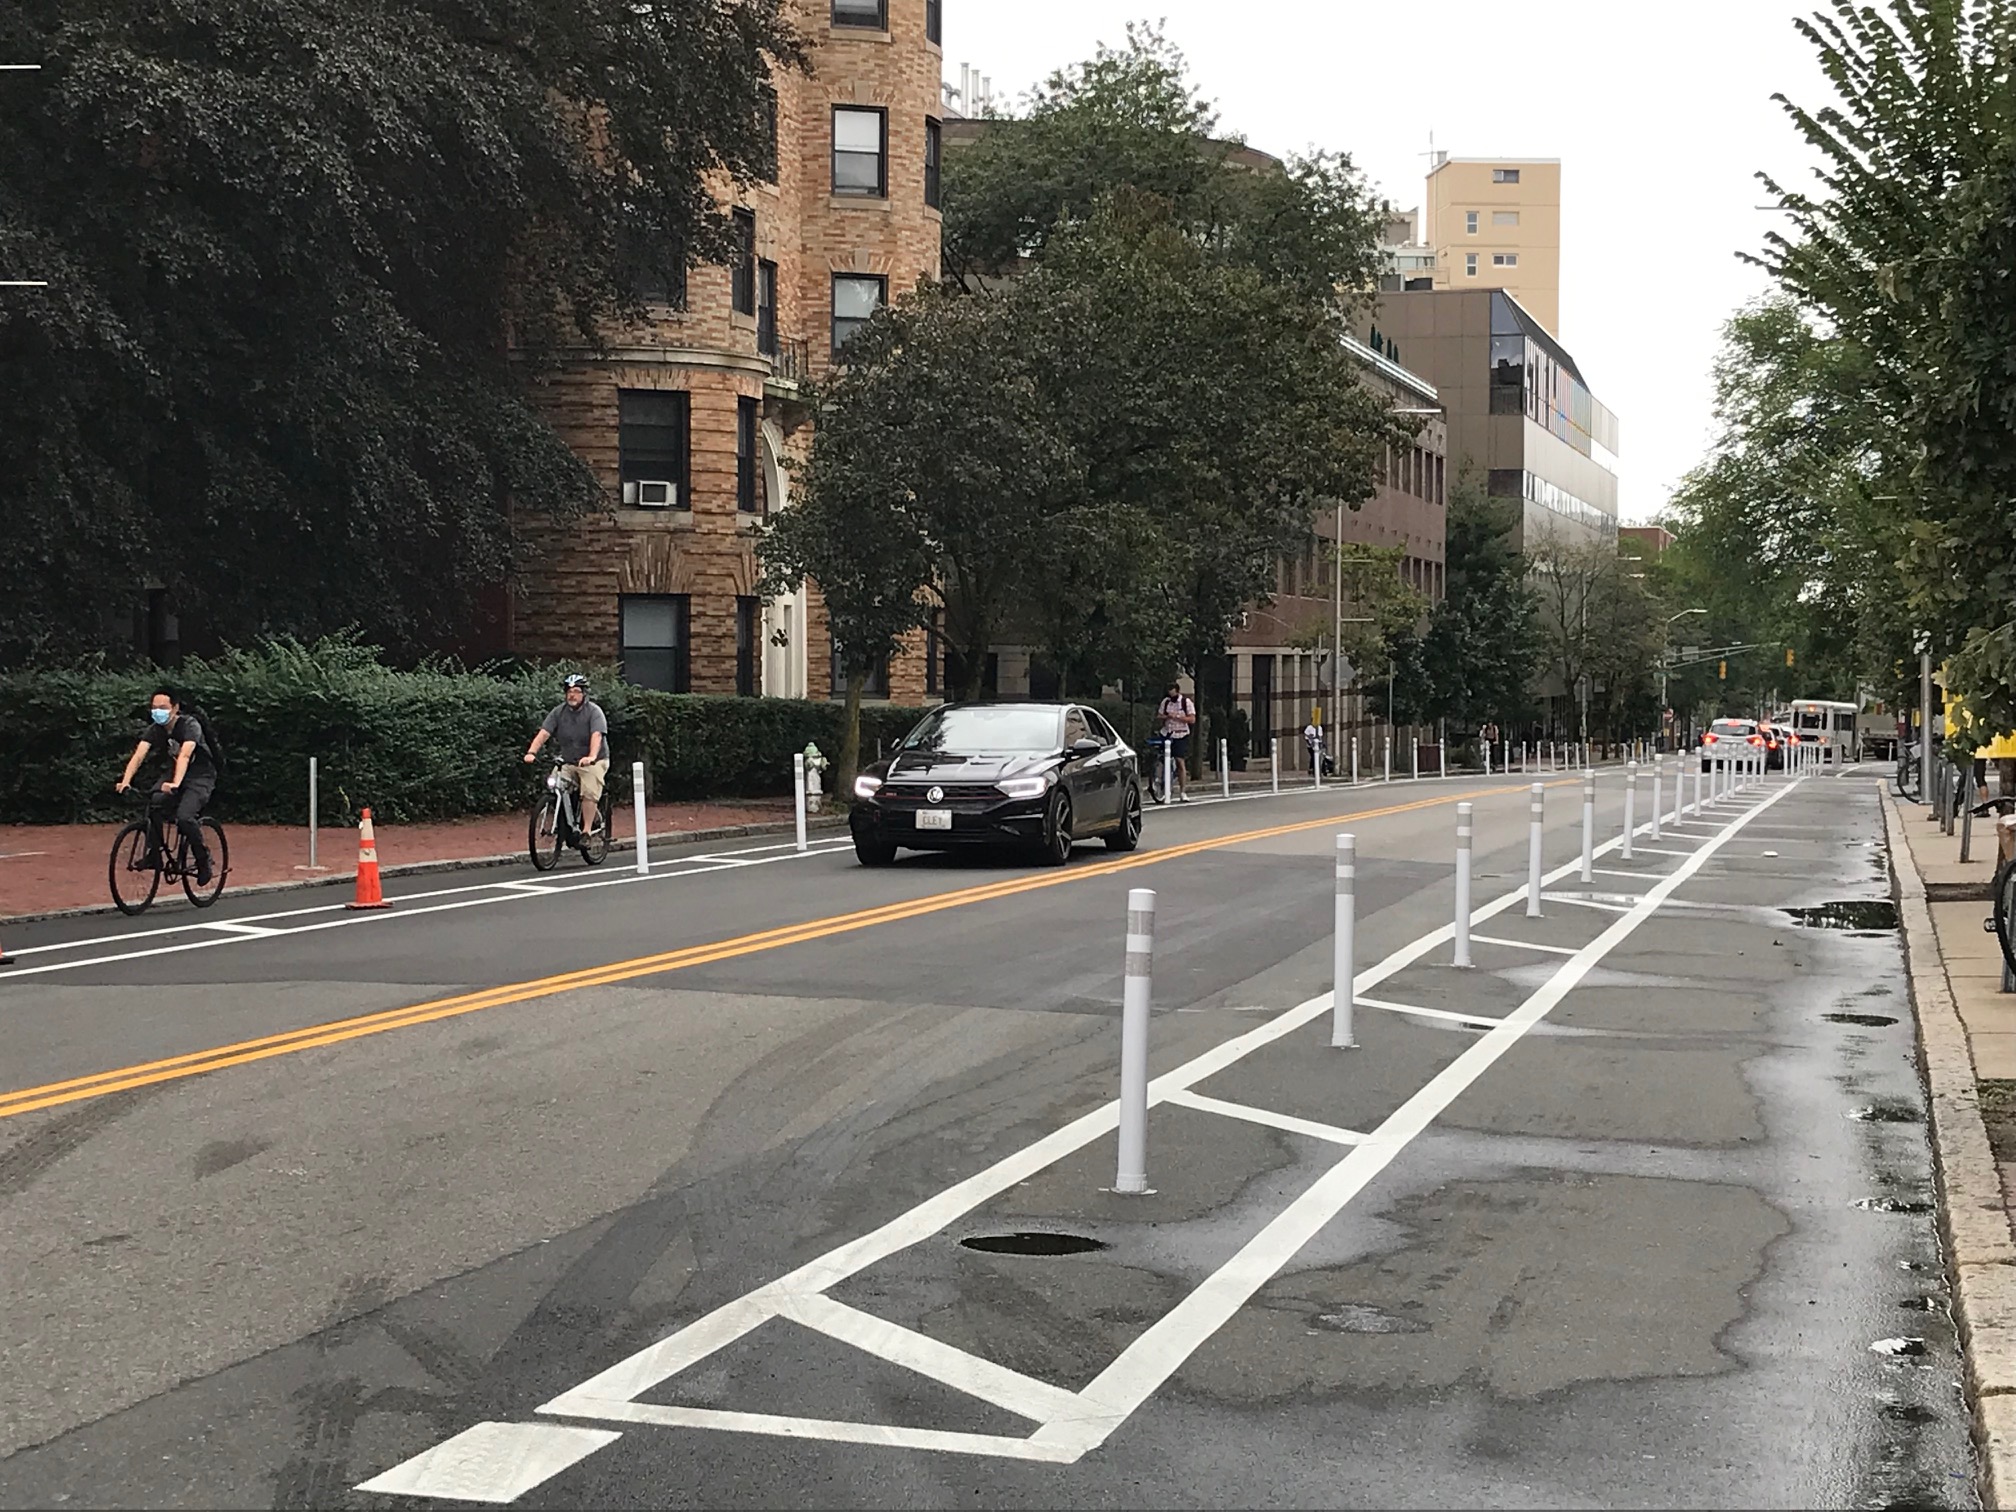 New separated bike lanes on Massachusetts Avenue near Dana Street in Cambridge.